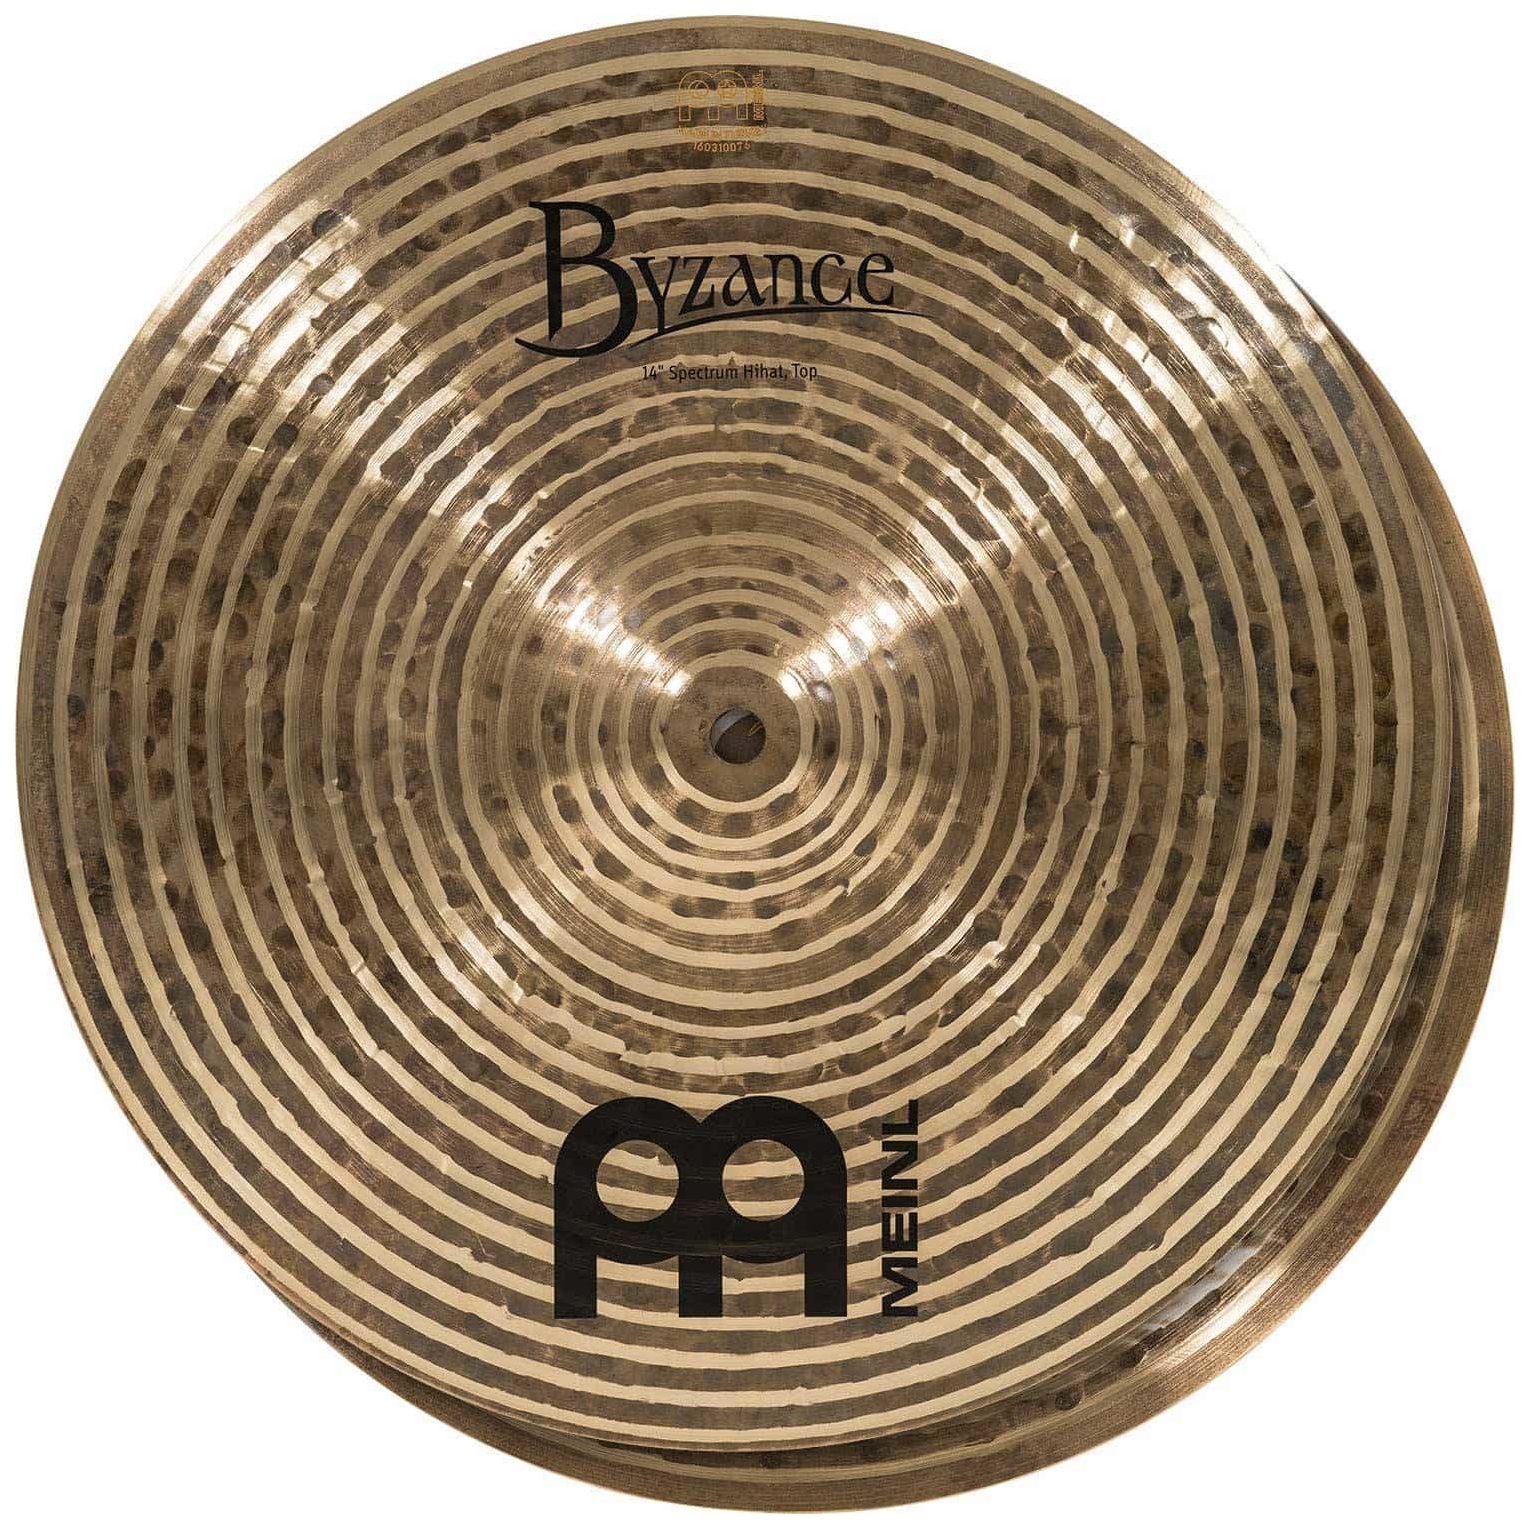 Meinl Cymbals B14SH - 14" Byzance Dark Spectrum Hihat 